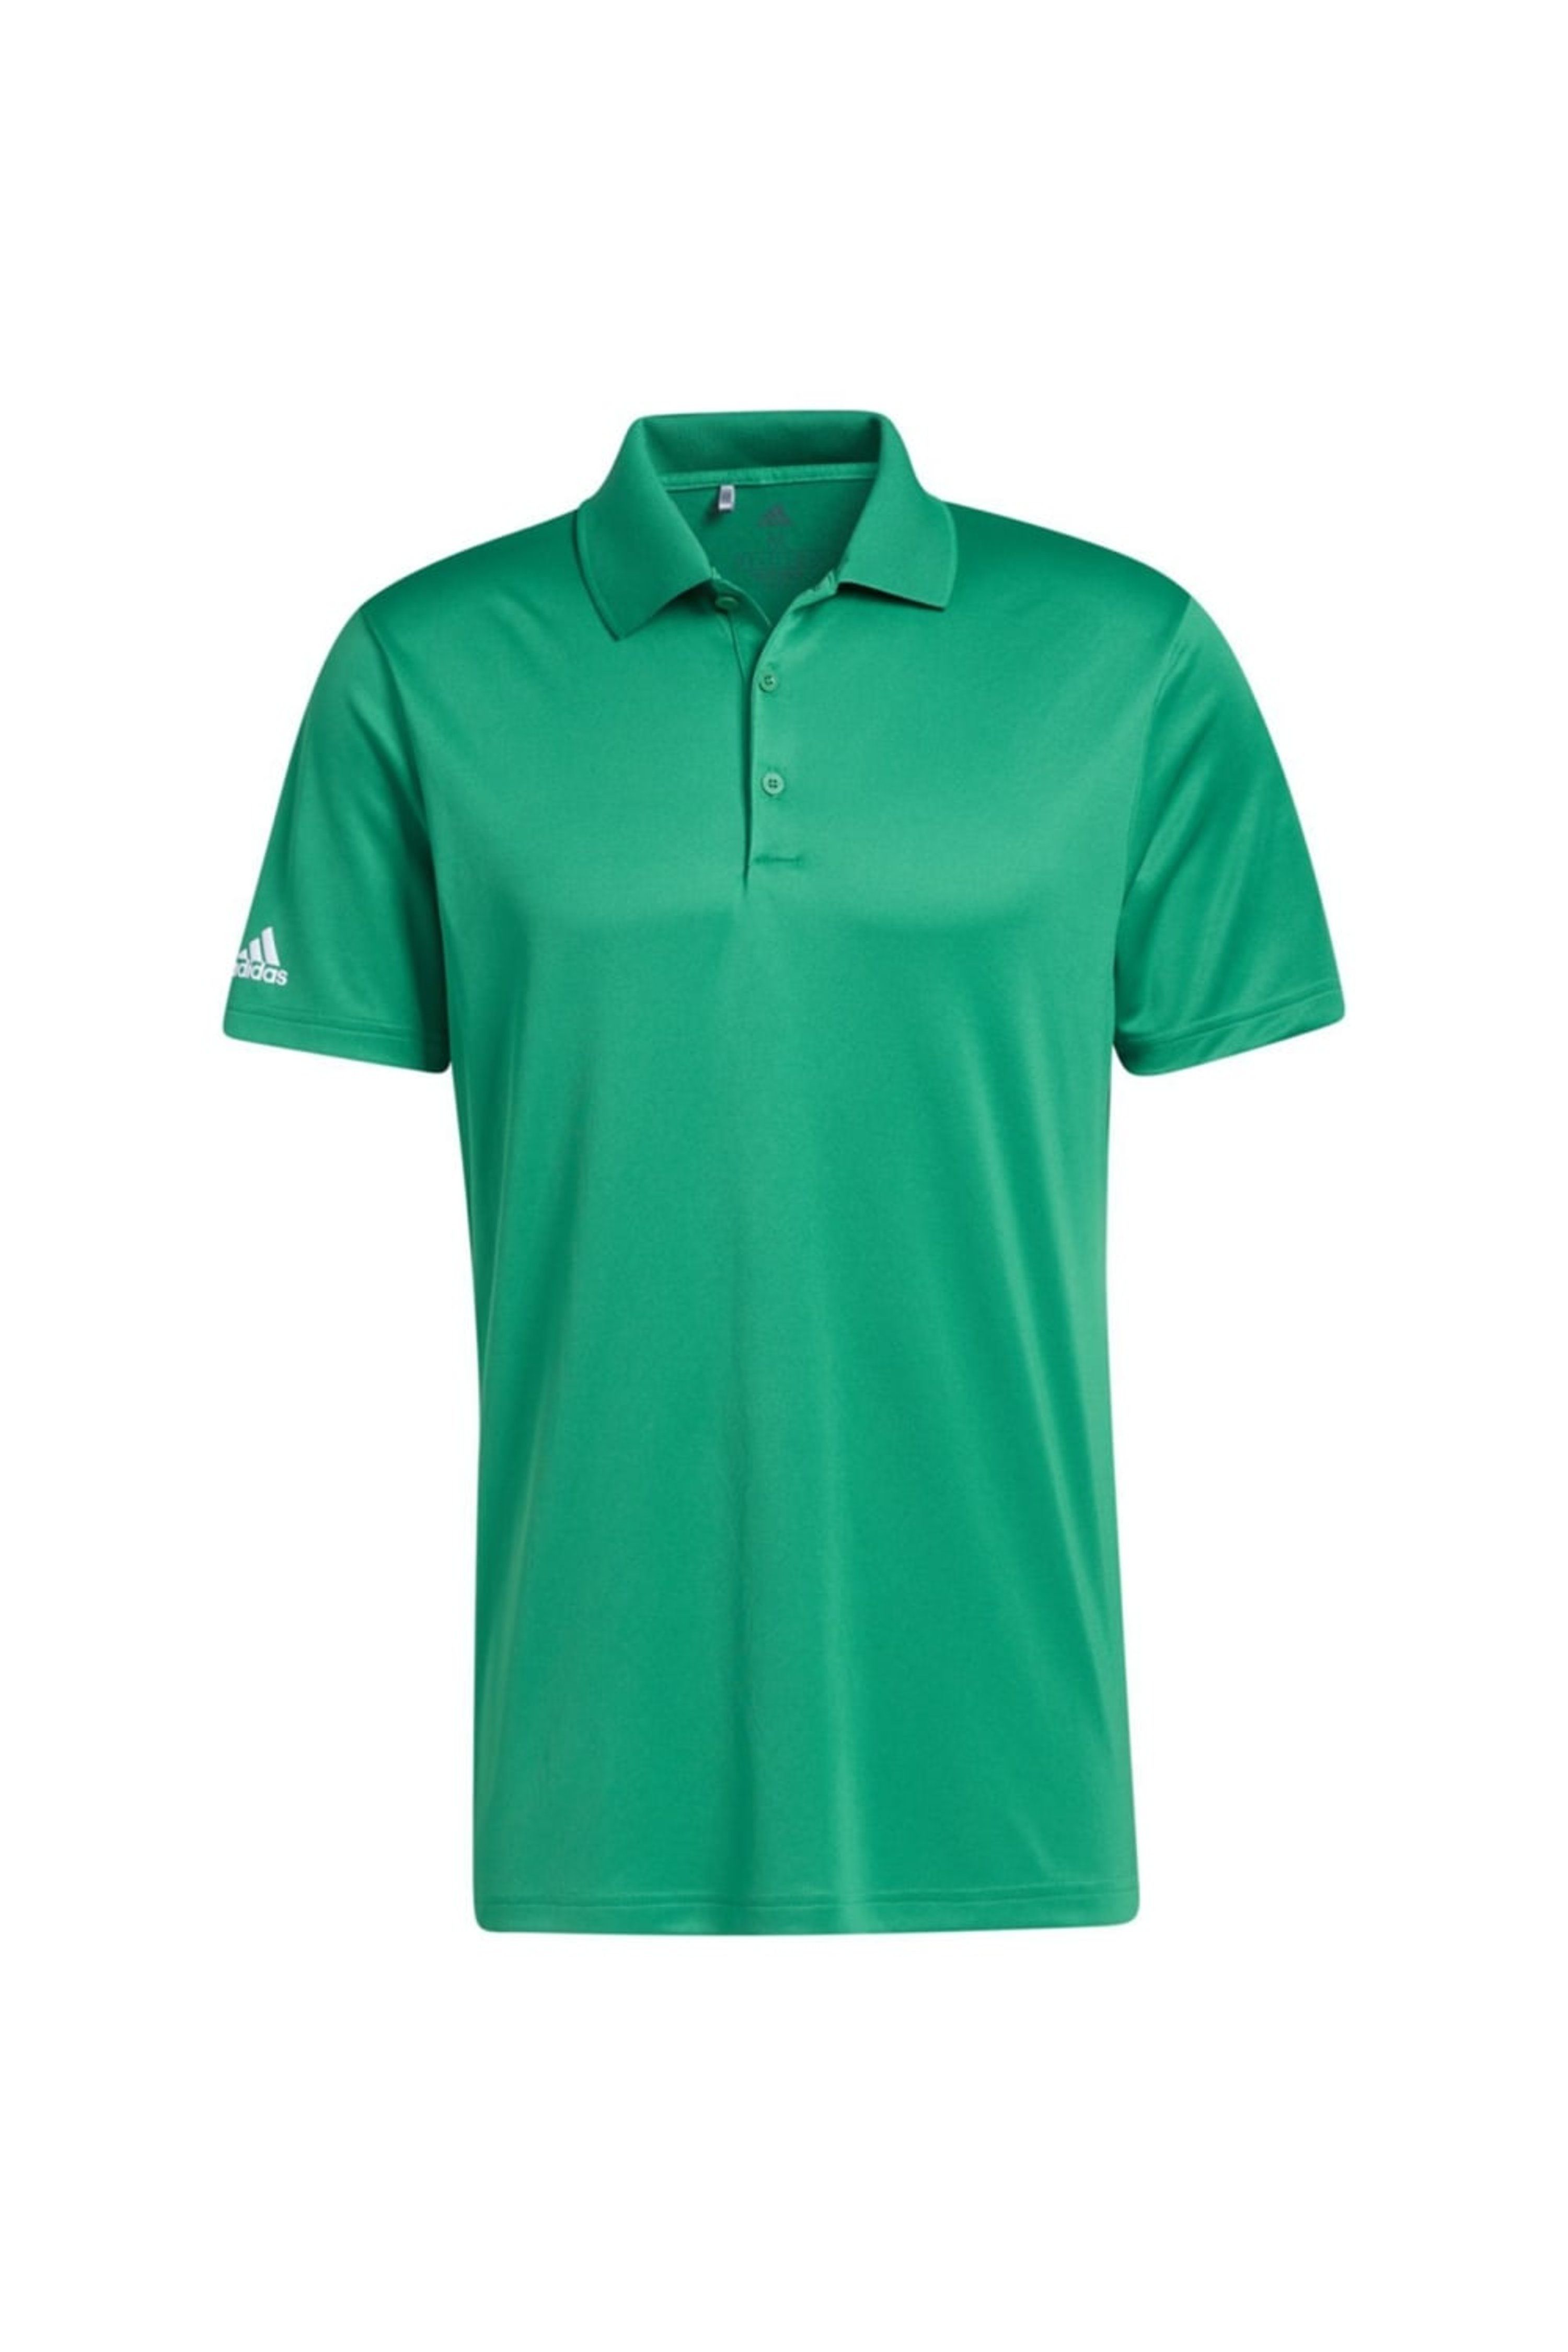 Adidas Mens Polo Shirt (Green) - M - Also in: L, S, XL, XXL | Verishop